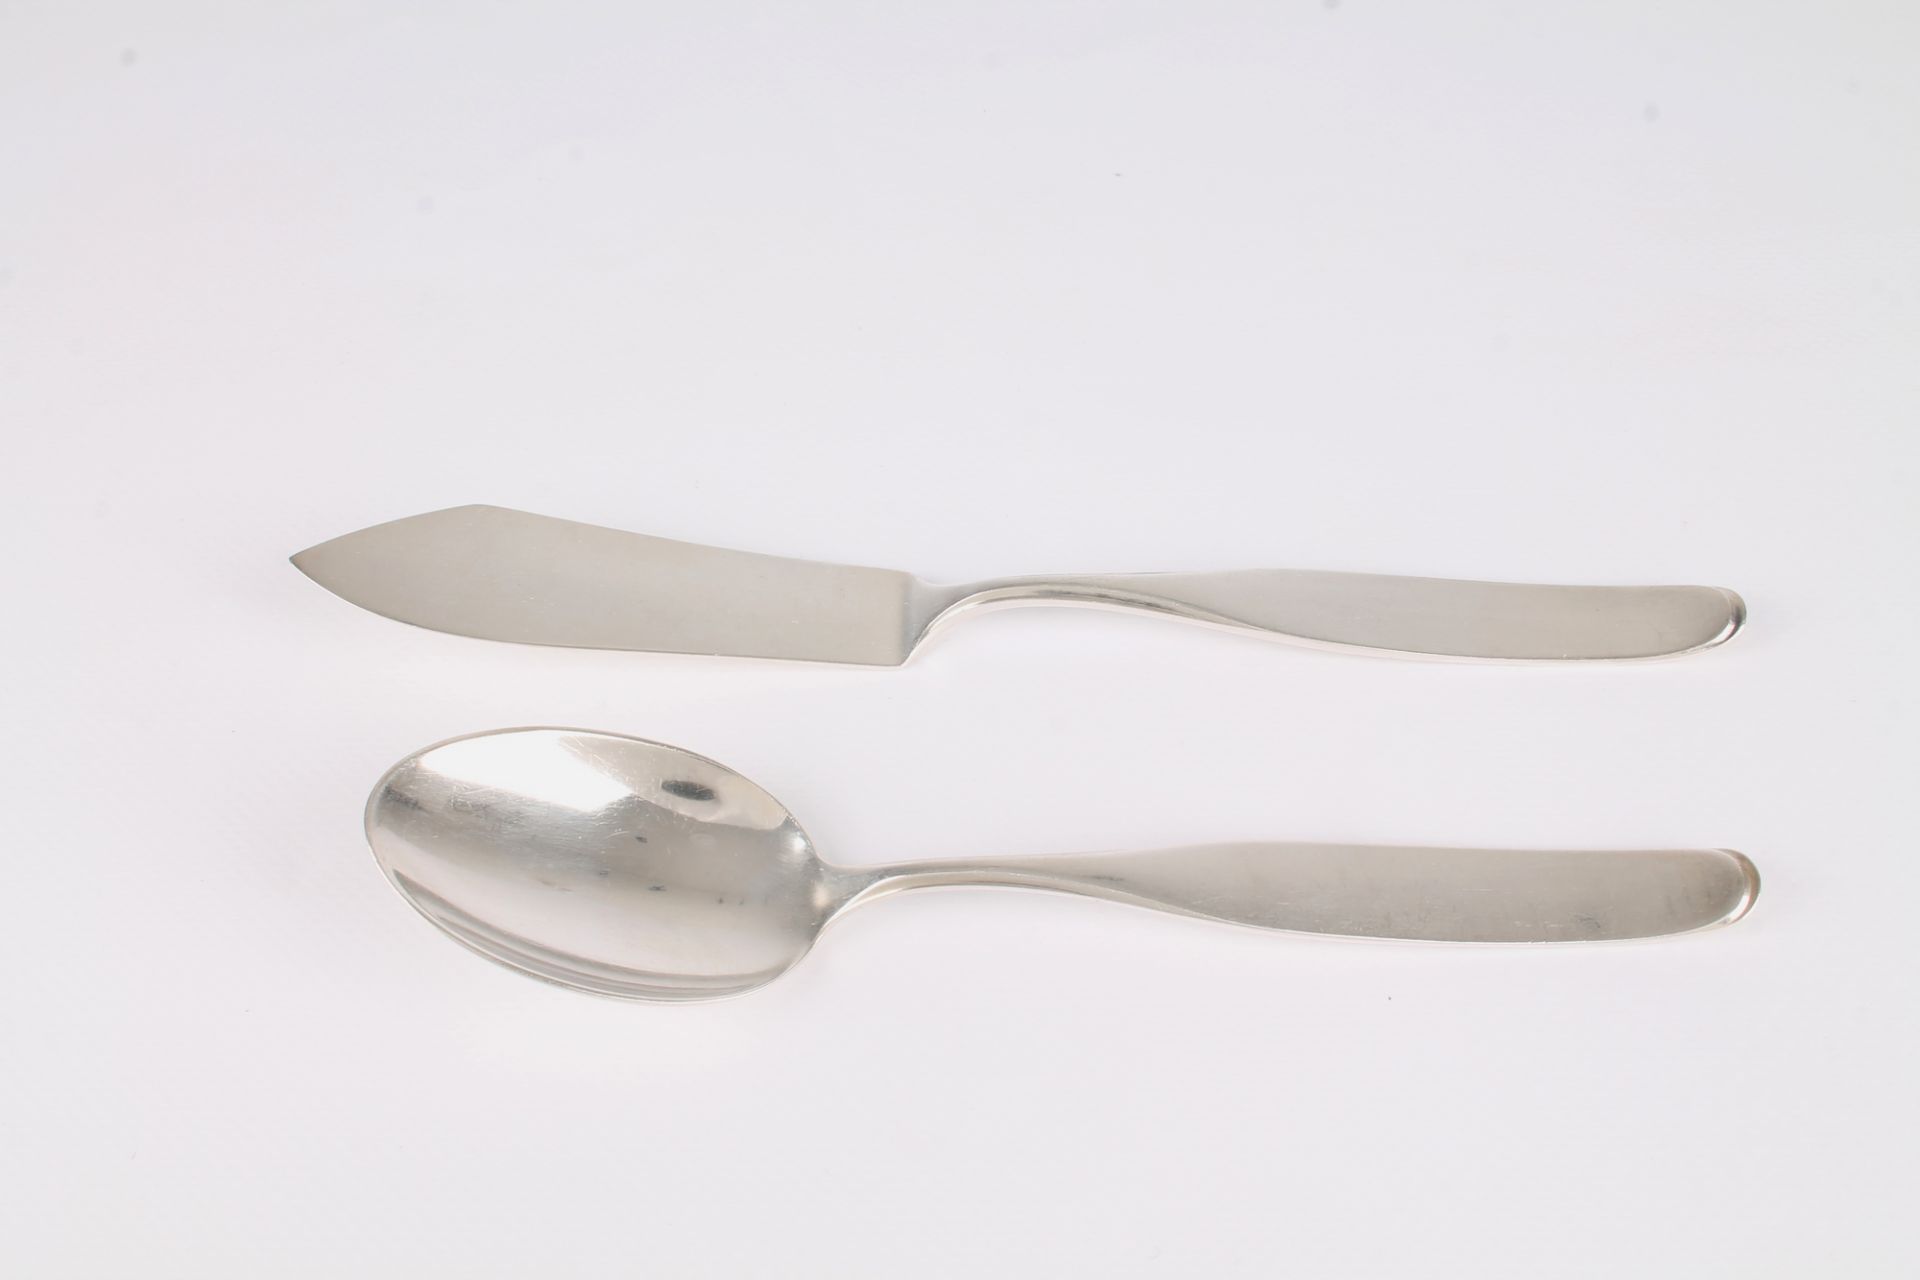 Wilkens Constanze Besteck 800 Silber, silver cutlery, - Image 6 of 10